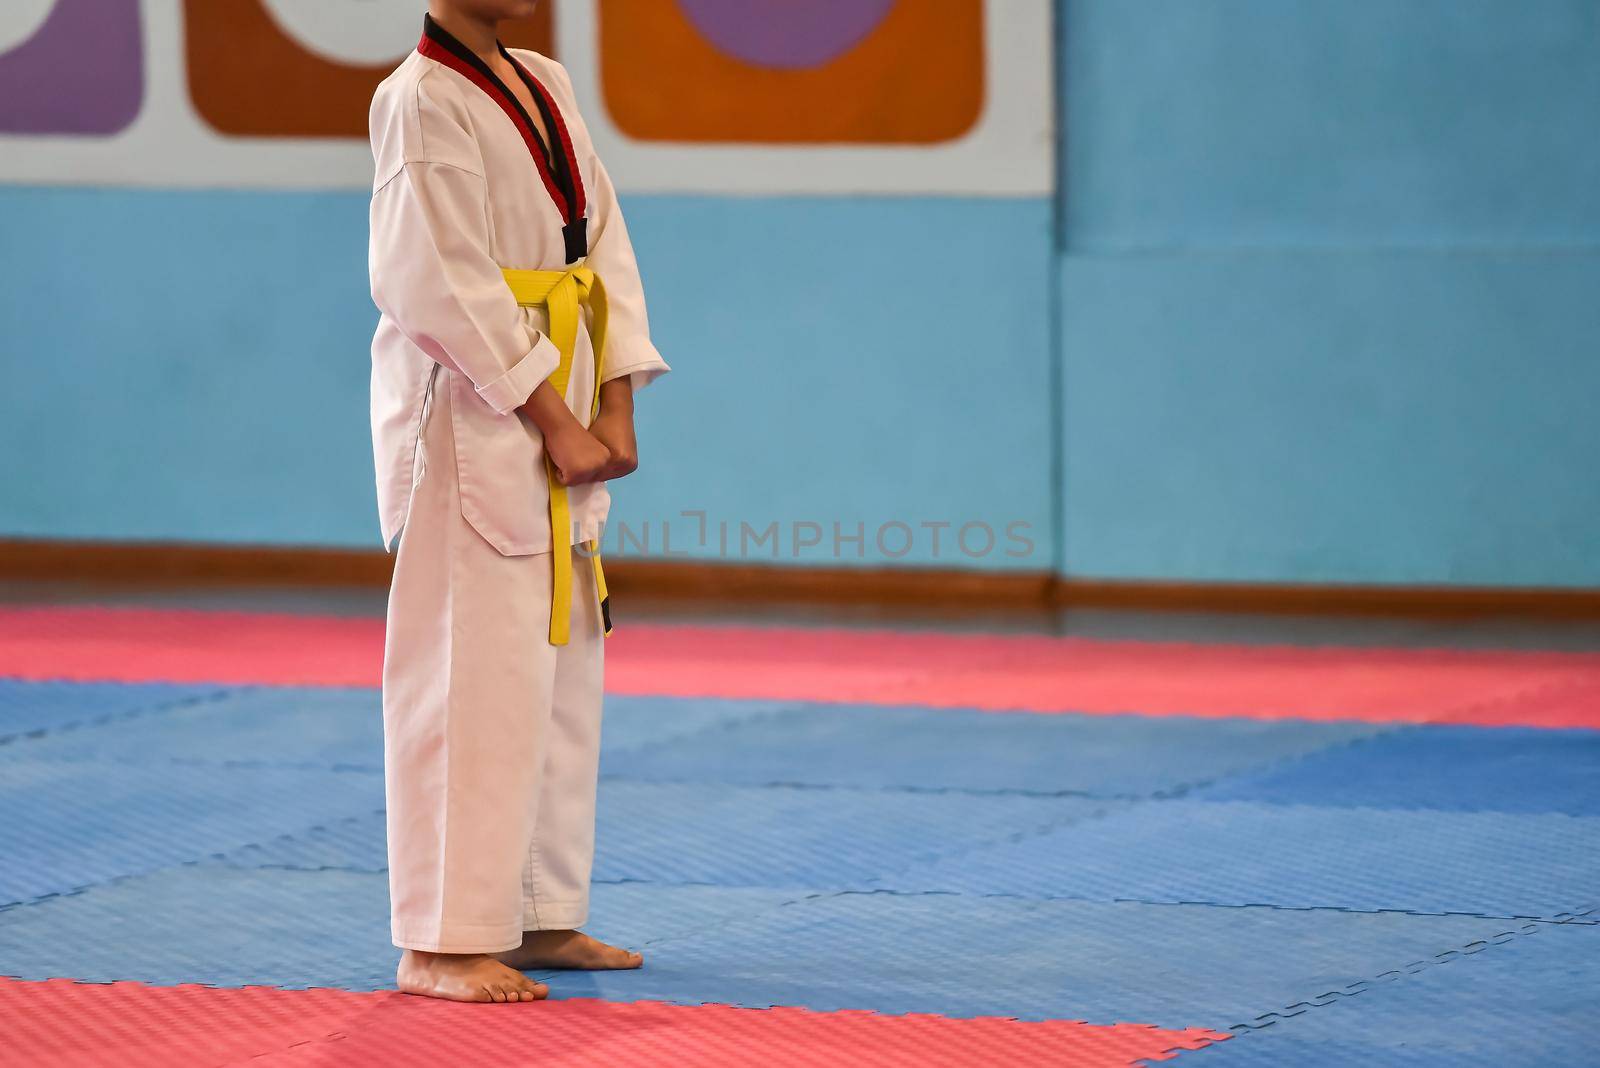 Taekwondo kids. A boy athlete stands in a taekwondo uniform with a yellow belt during a taekwondo tournament.